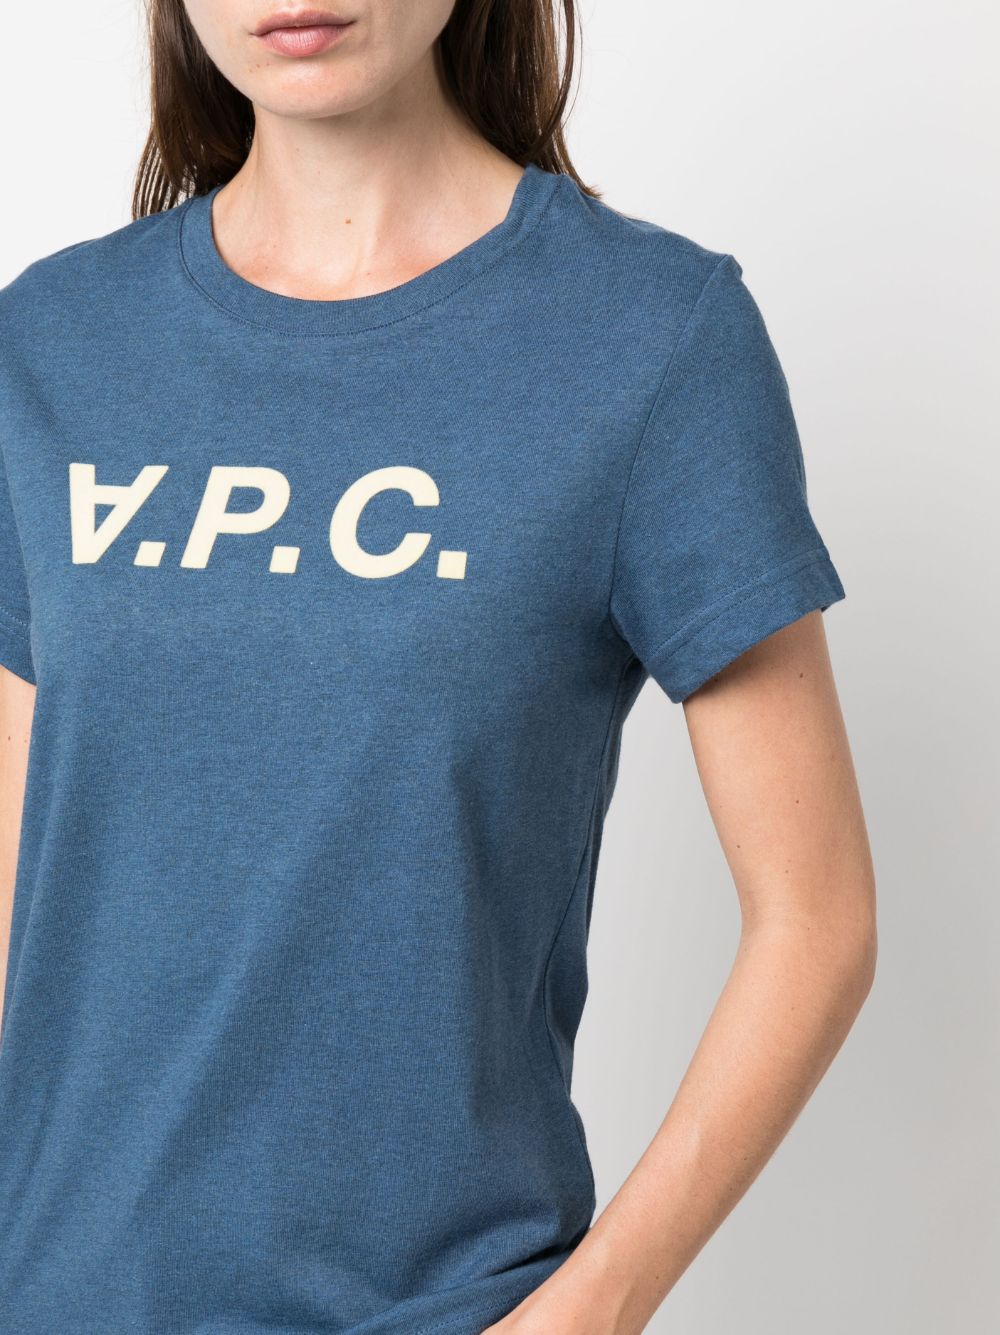 Ny mening brevpapir Ny ankomst A.P.C. VPC logo-print Cotton T-shirt - Farfetch